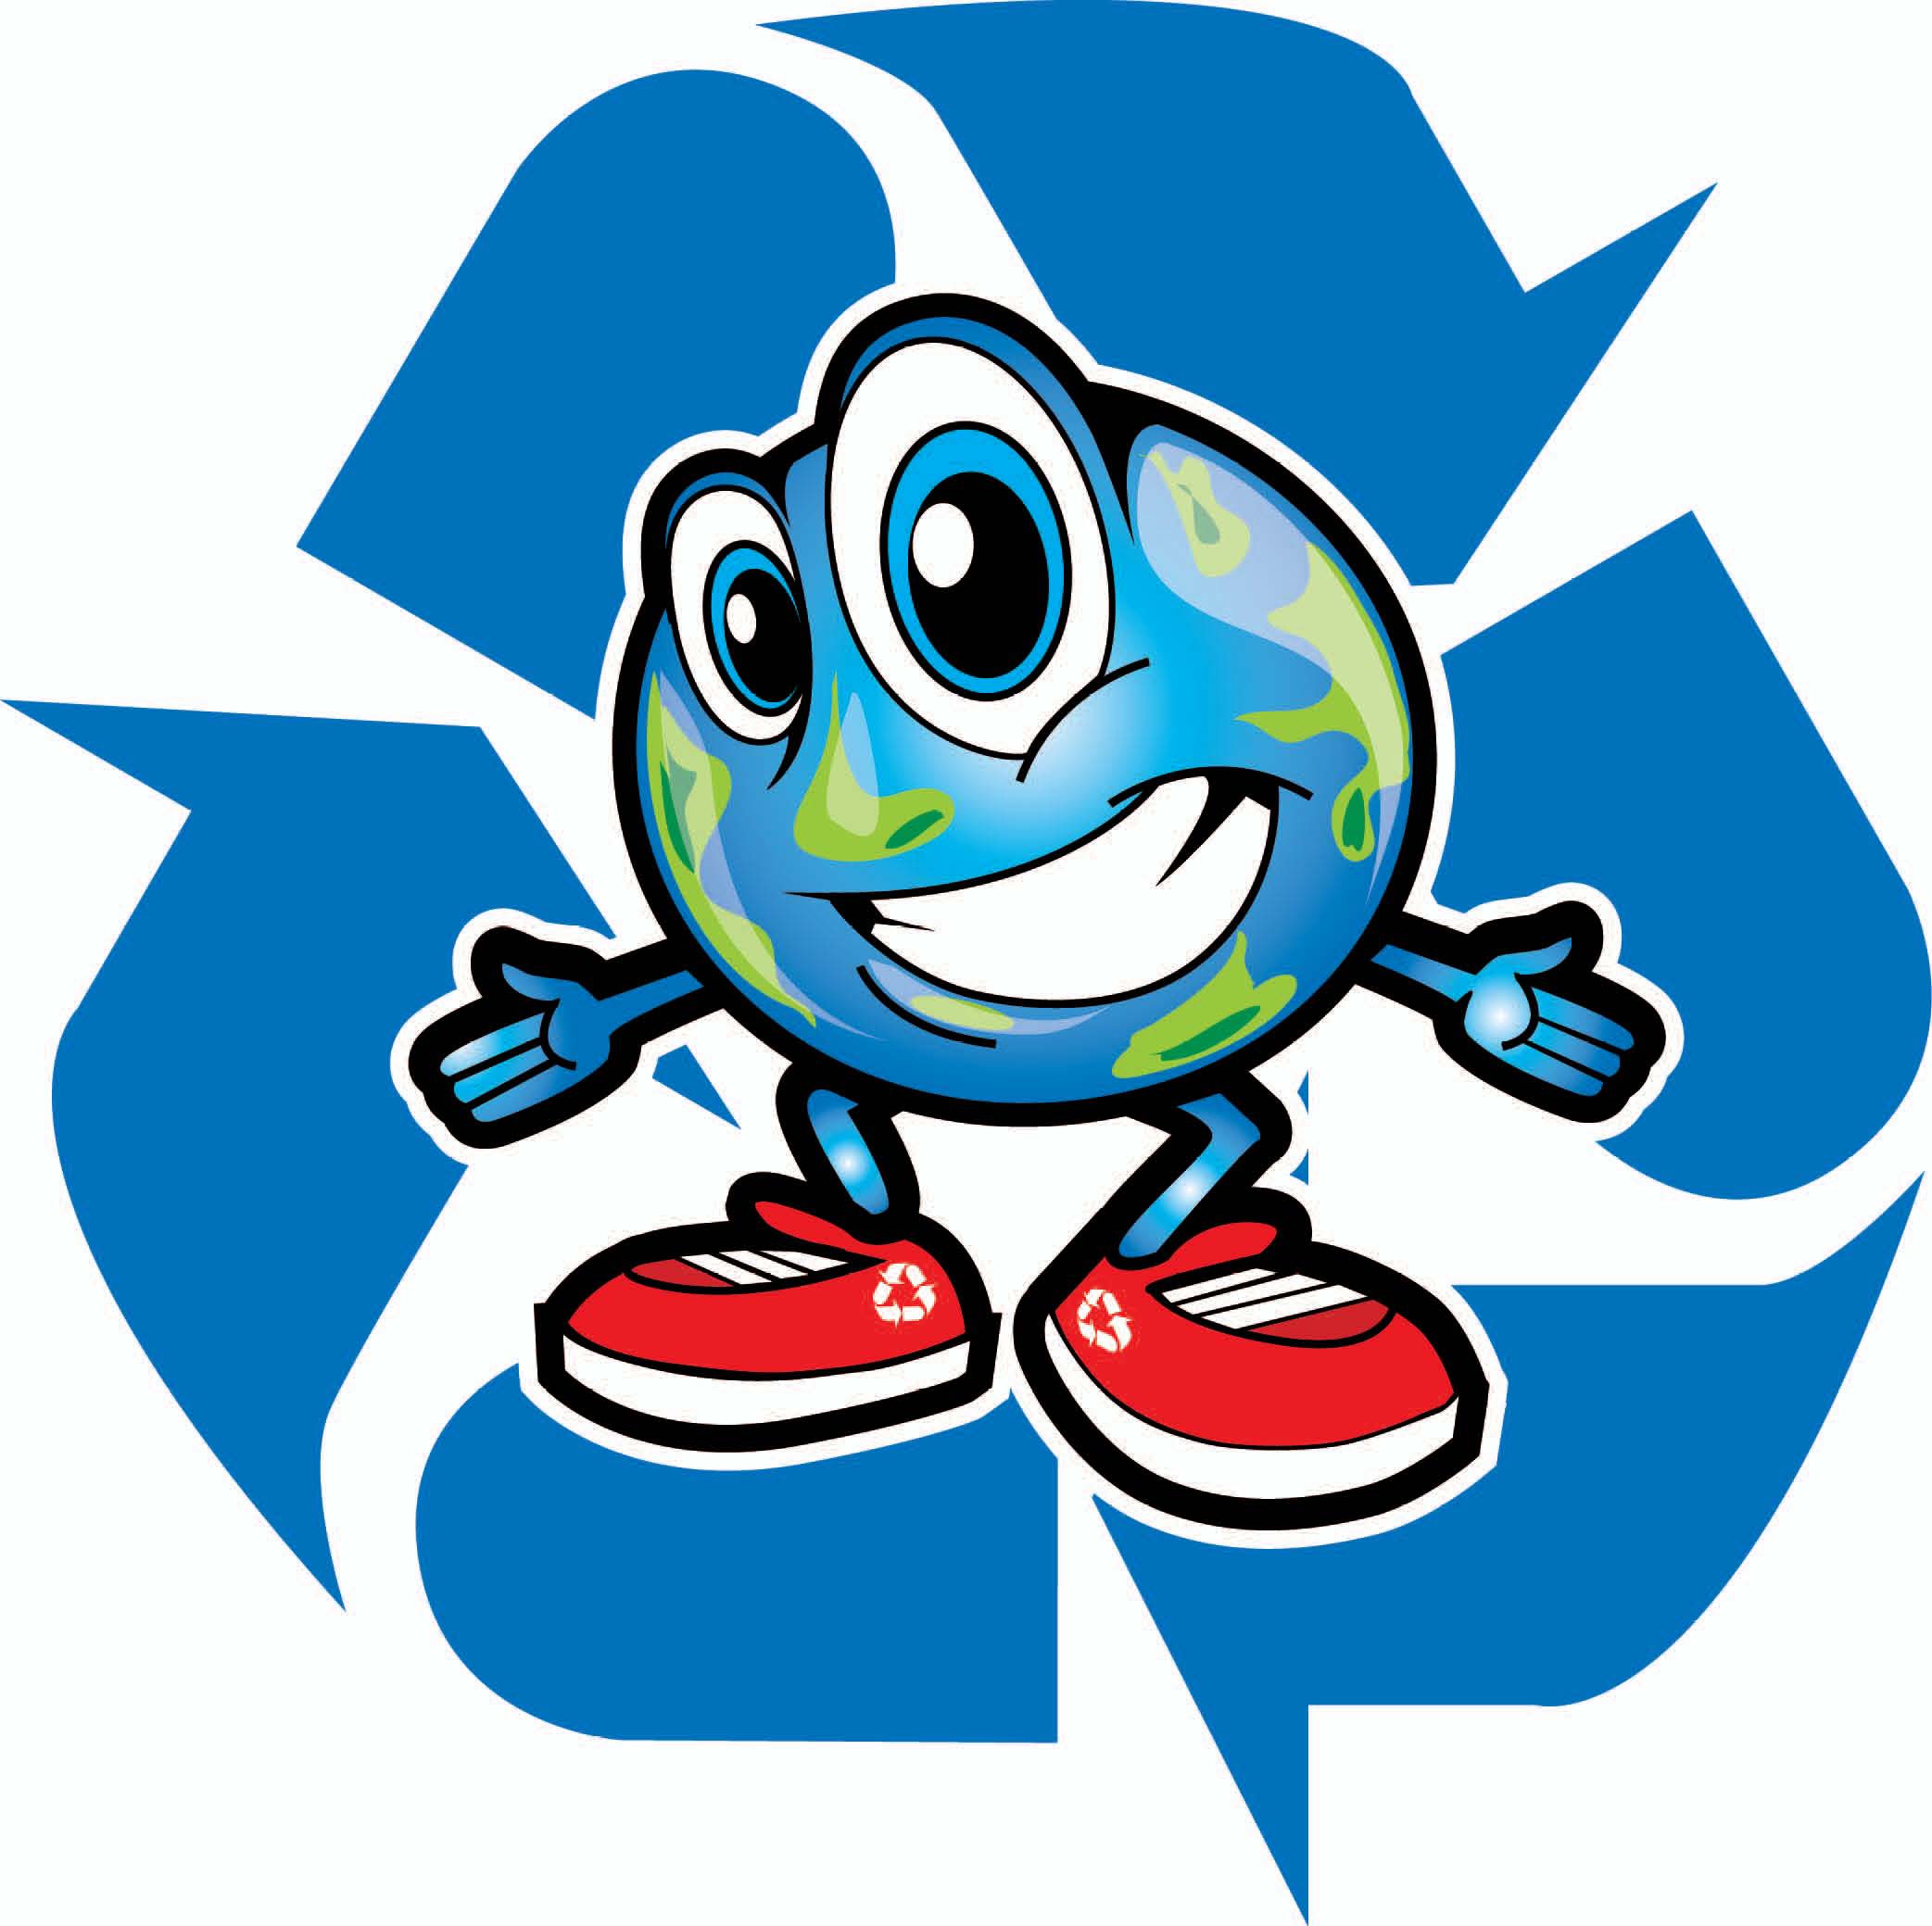 recycling logo ideas 1